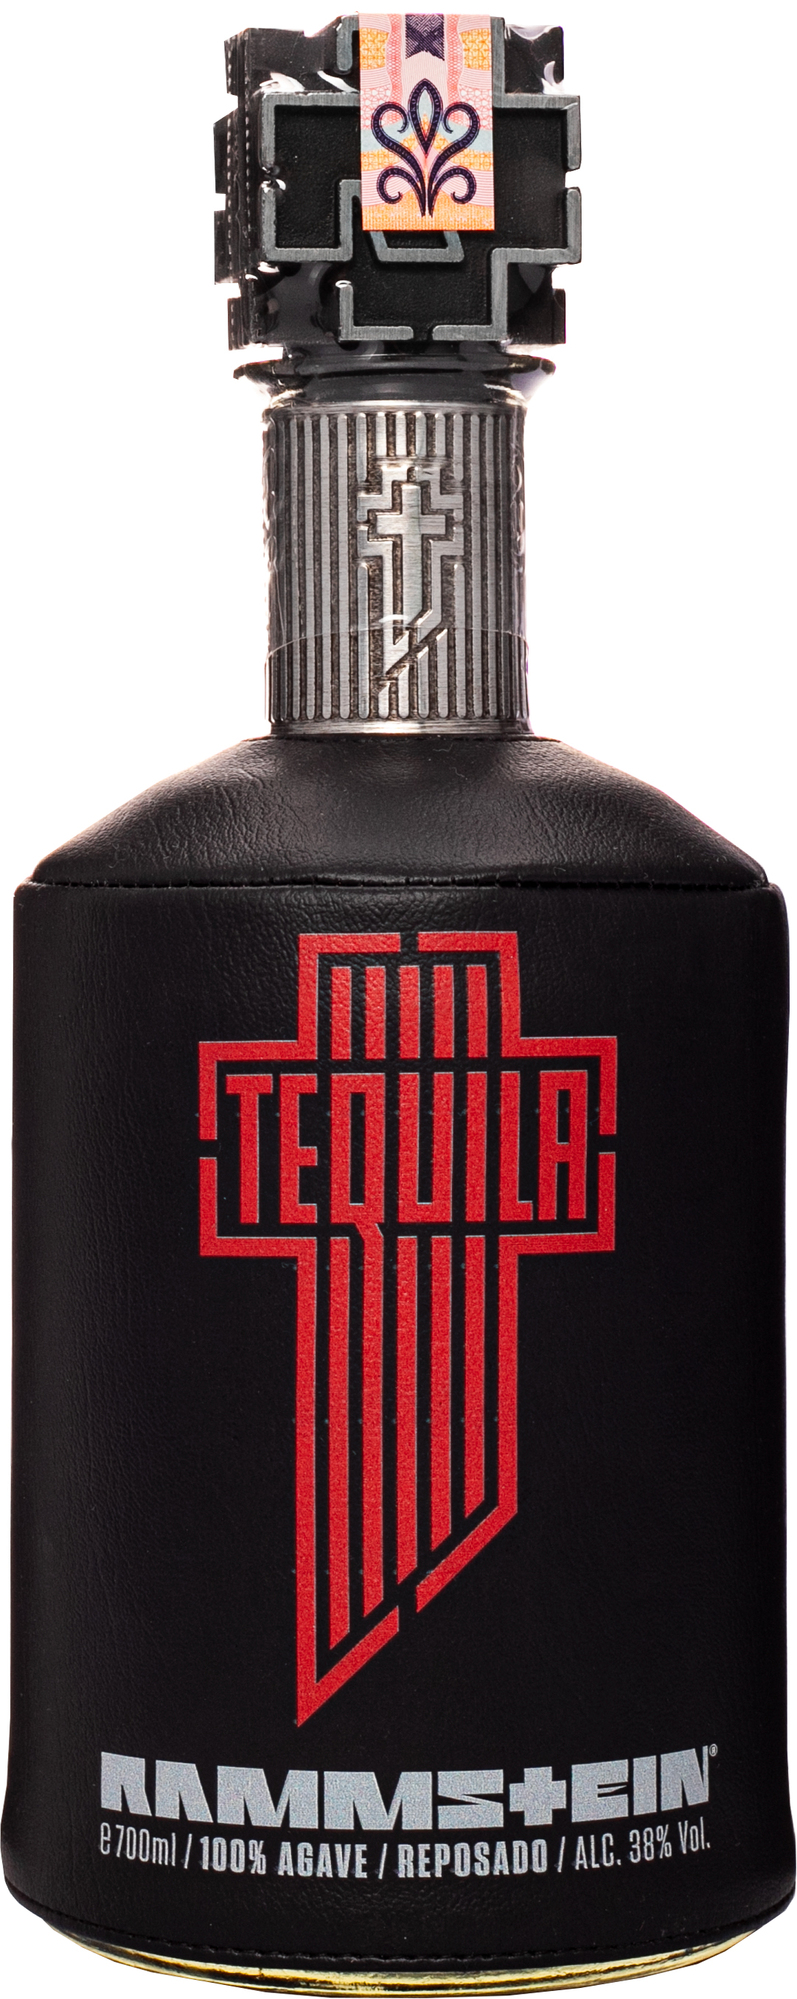 1423 Aps Rammstein Tequila Reposado, 38%, 0,7l